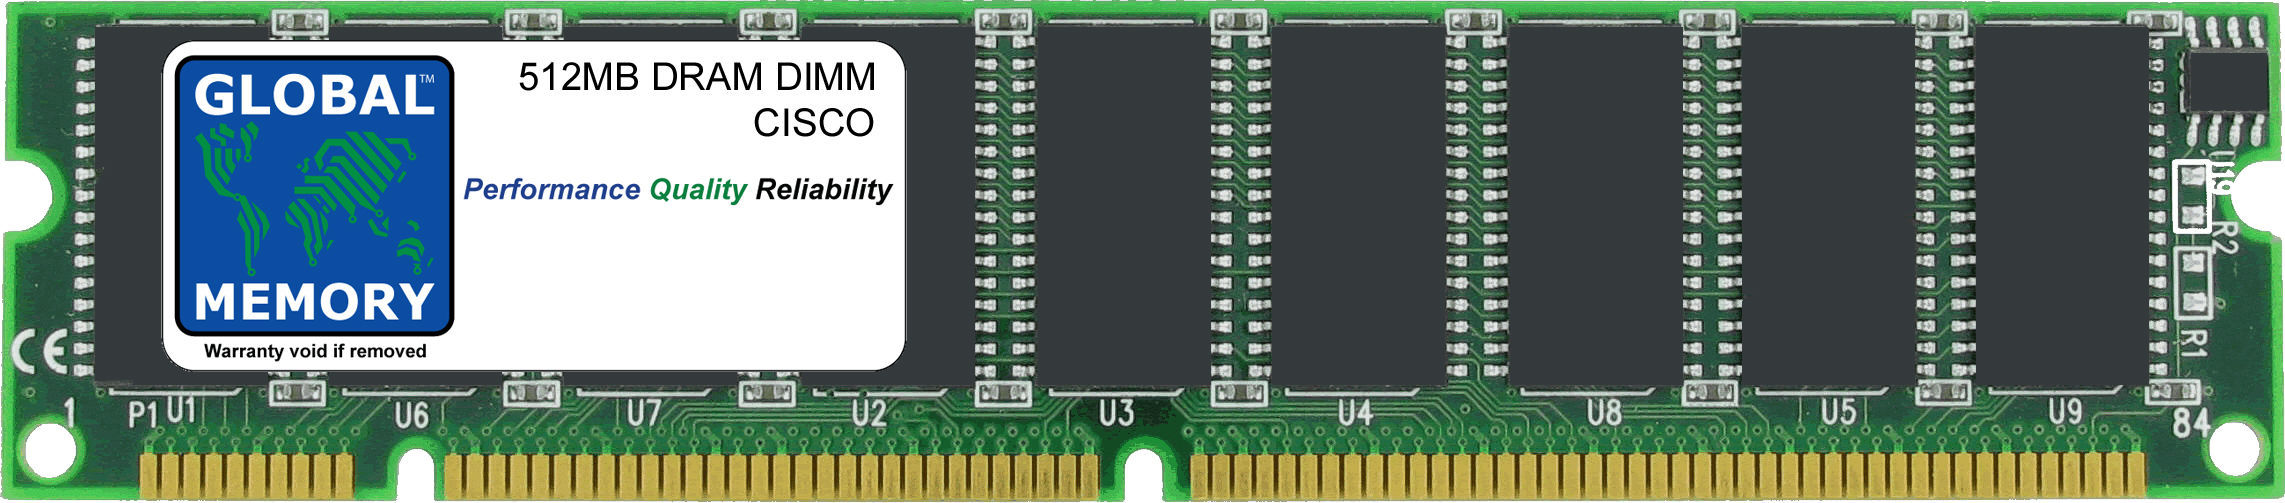 512MB DRAM DIMM MEMORY RAM FOR CISCO 7400 ASR / 7400 VPN ROUTERS (MEM-7400ASR-512MB) - Click Image to Close